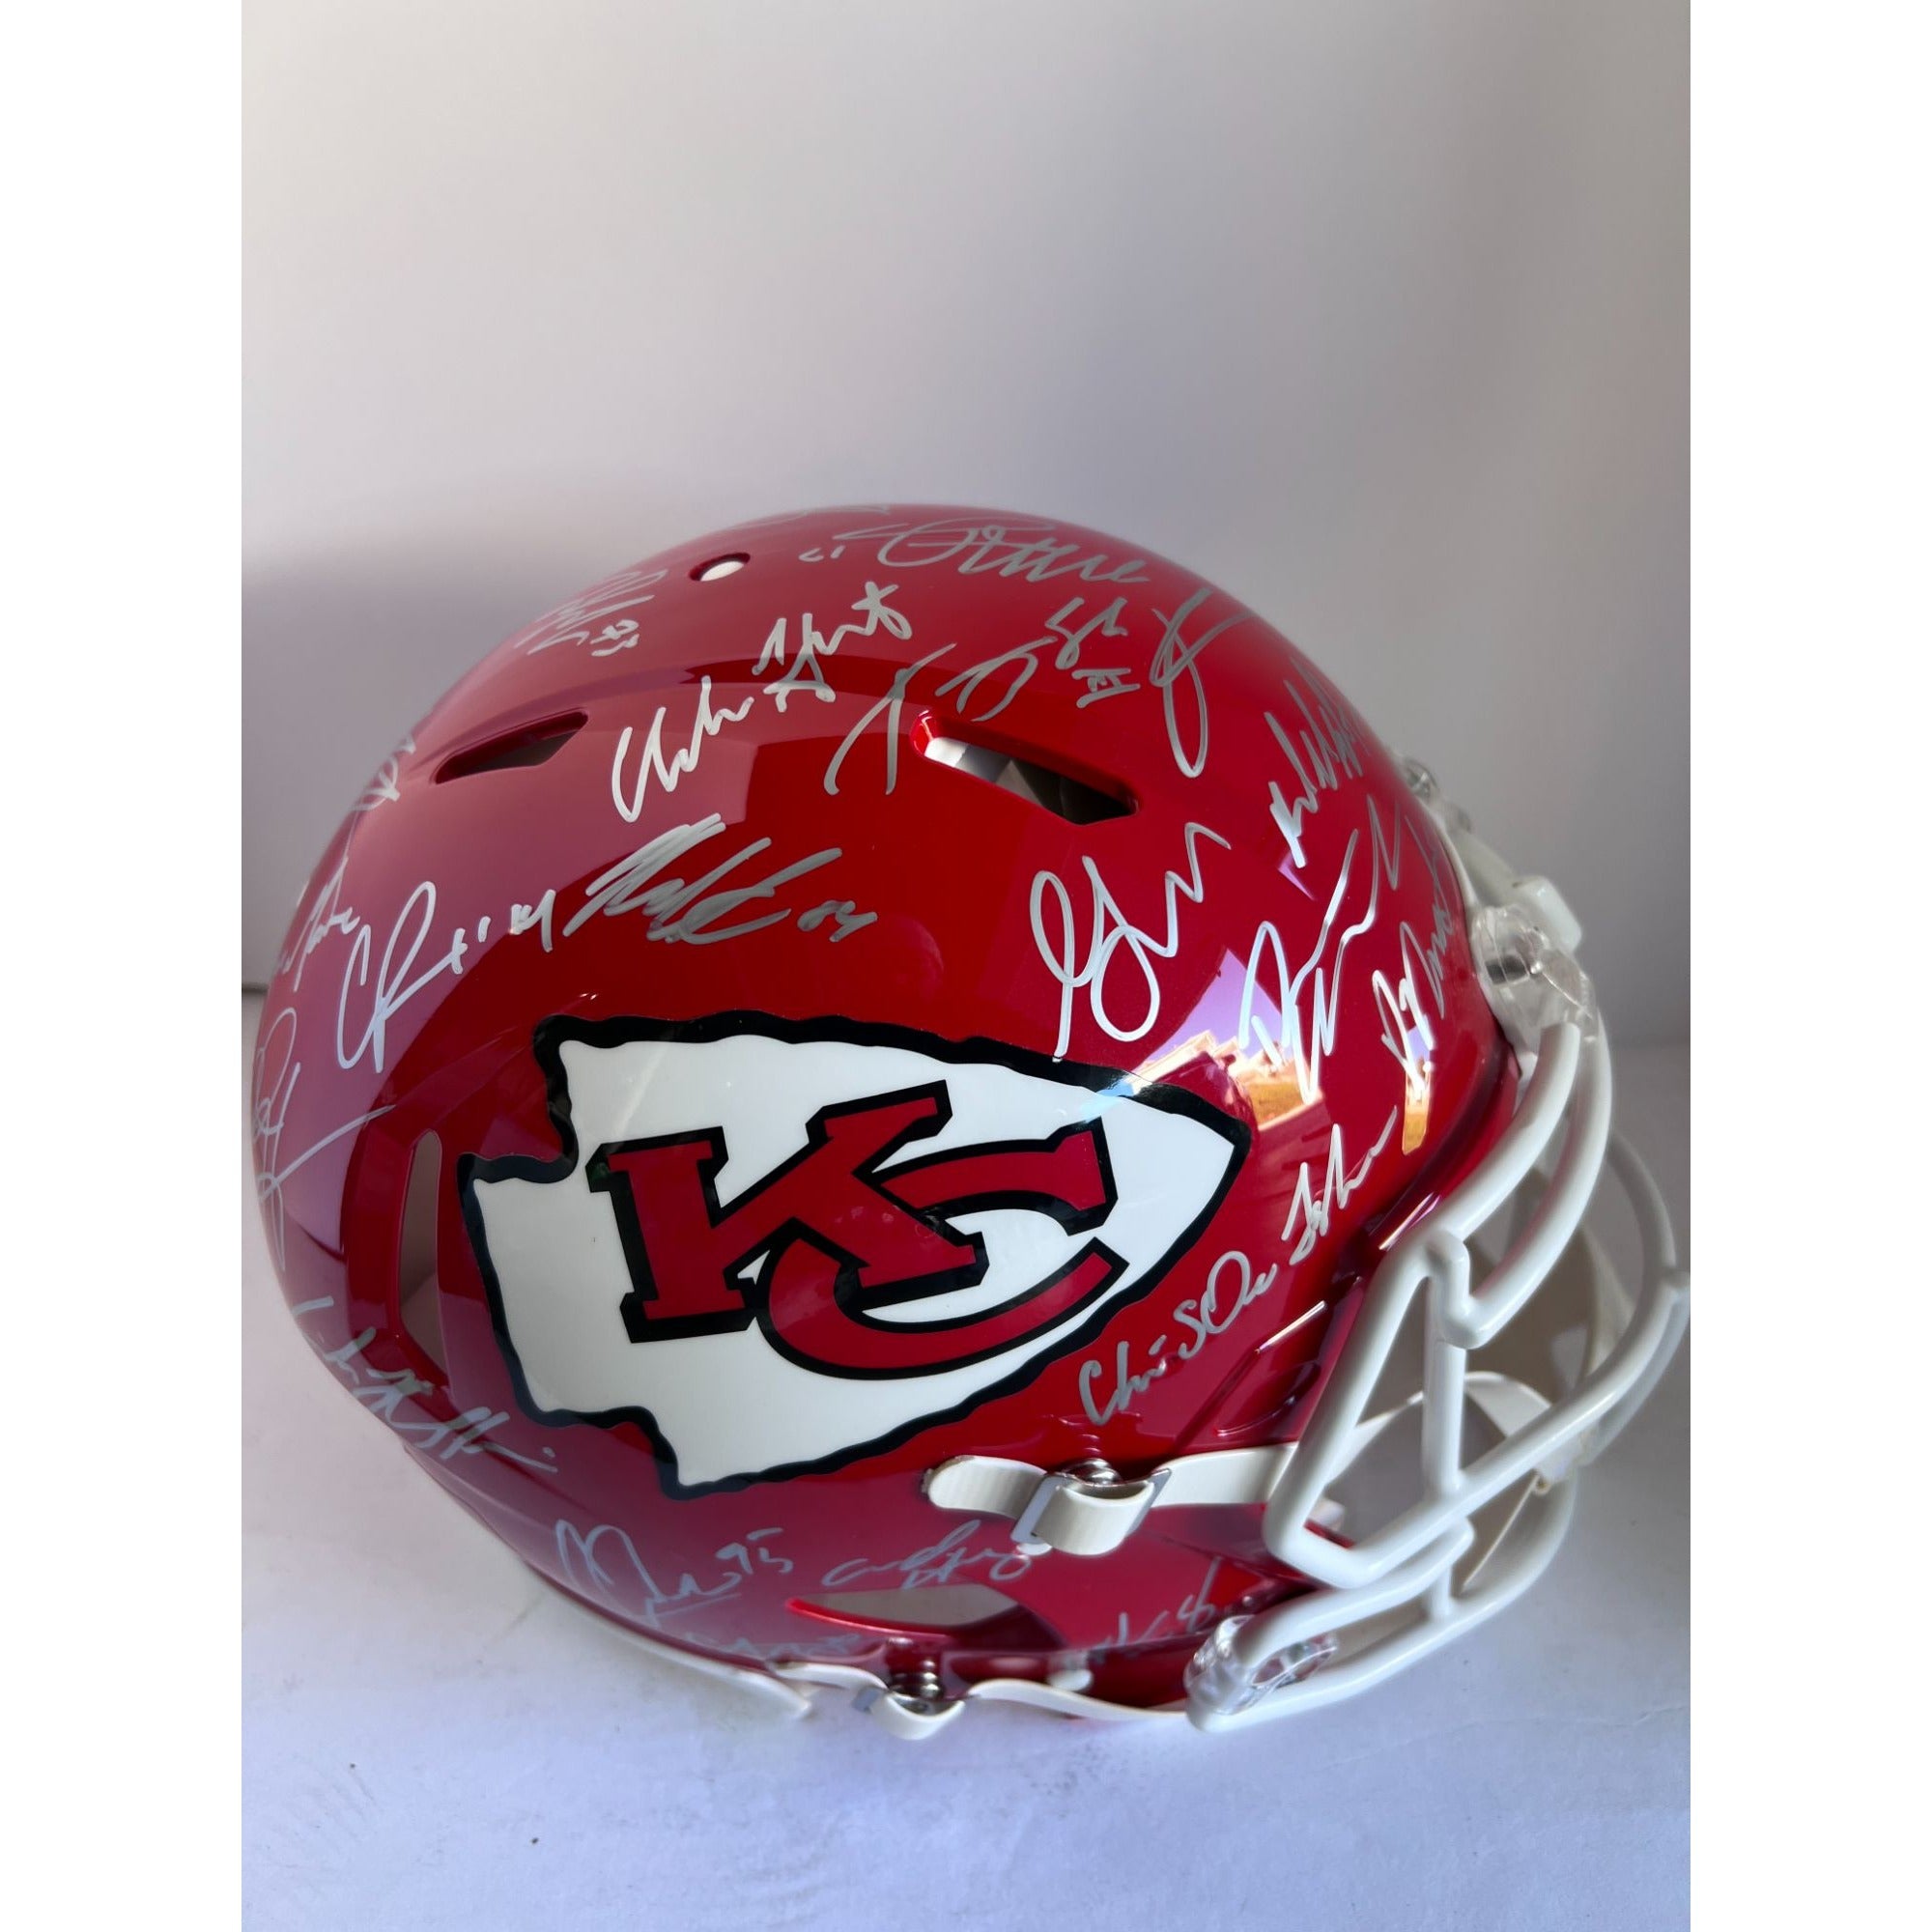 Patrick Mahomes Andy Reid Travis Kelce 2022- 23 Super Bowl champion Kansas City Chiefs Riddell Speed Authentic team signed helmet signed